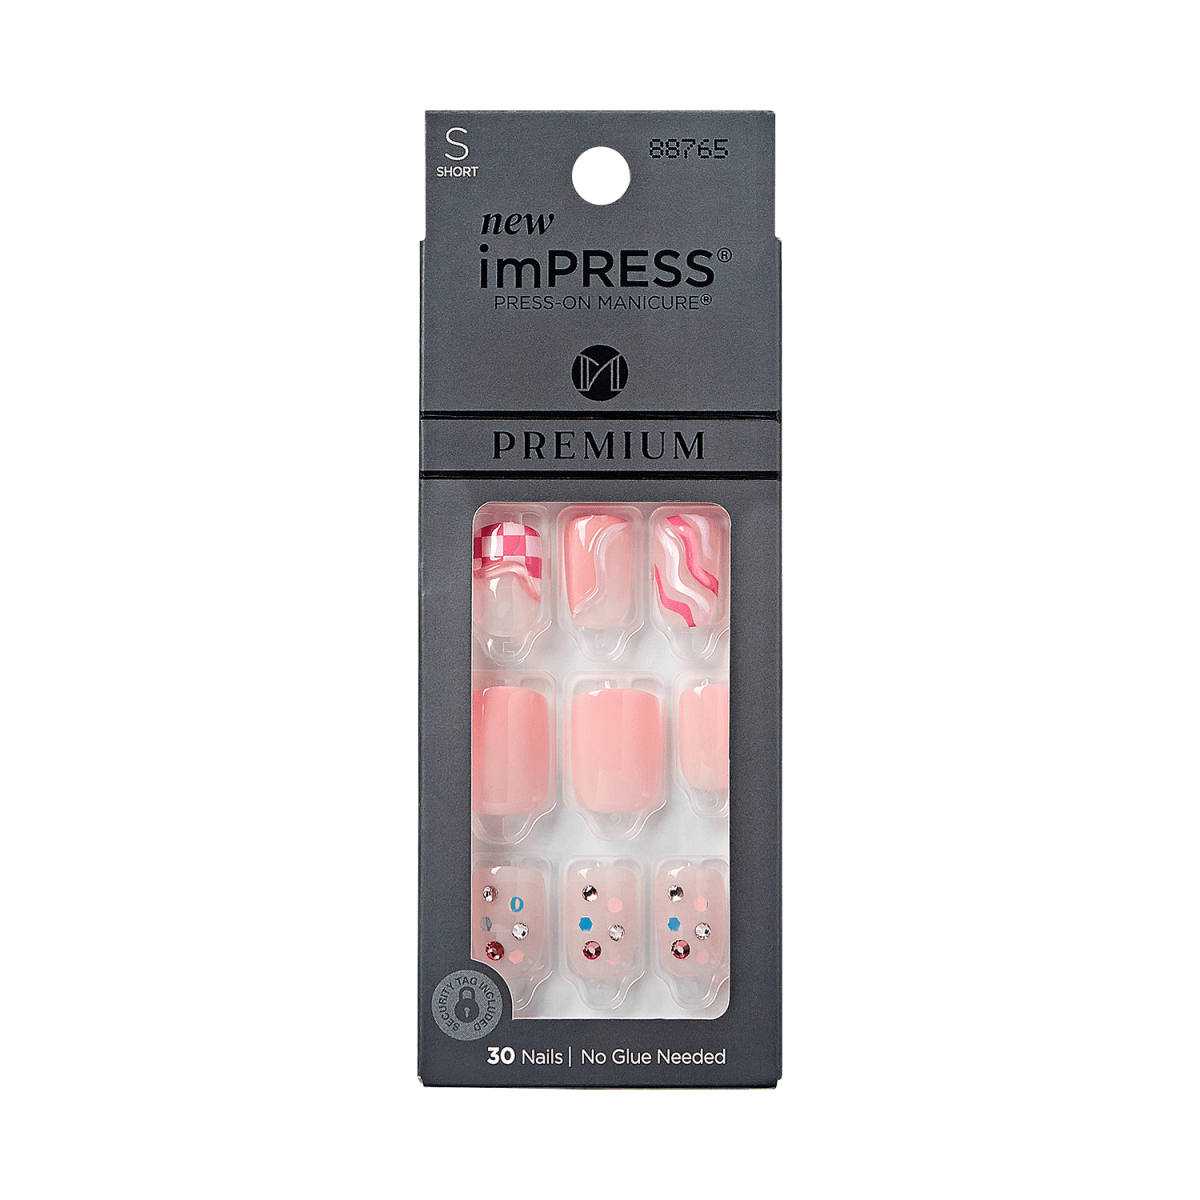 imPRESS Premium Press-On Manicure - Magic Shop